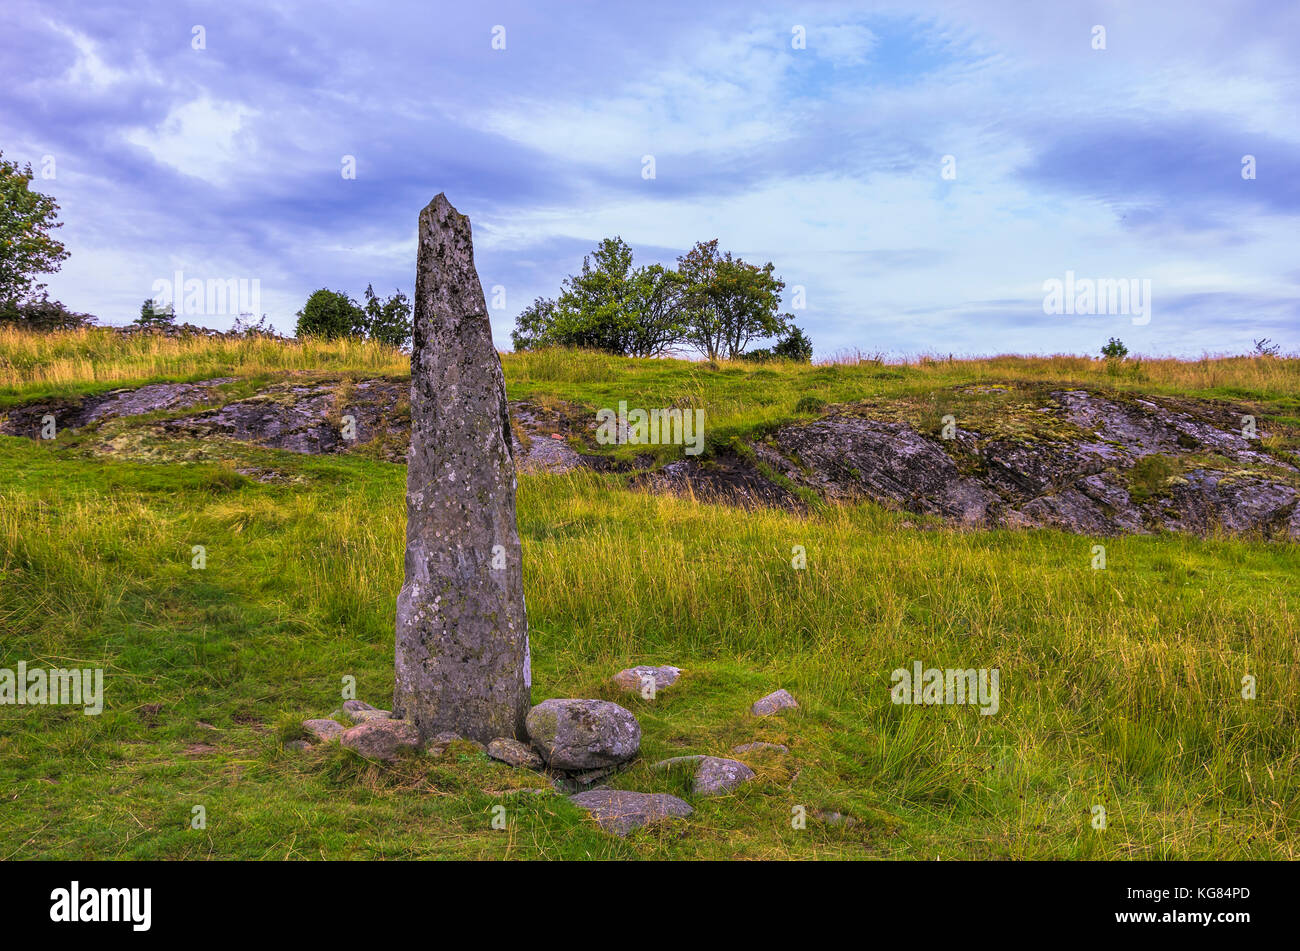 Le Rune Hoga pietra (Hogastenen) su Orust, Contea di Bohuslän, Svezia. Foto Stock